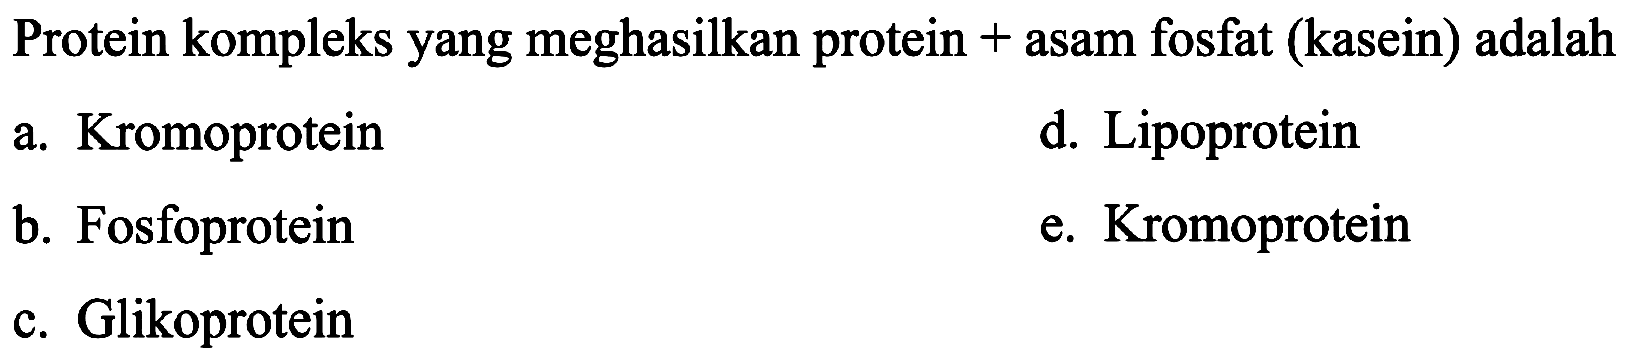 Protein kompleks yang meghasilkan protein  +  asam fosfat (kasein) adalah
a. Kromoprotein
d. Lipoprotein
b. Fosfoprotein
e. Kromoprotein
c. Glikoprotein